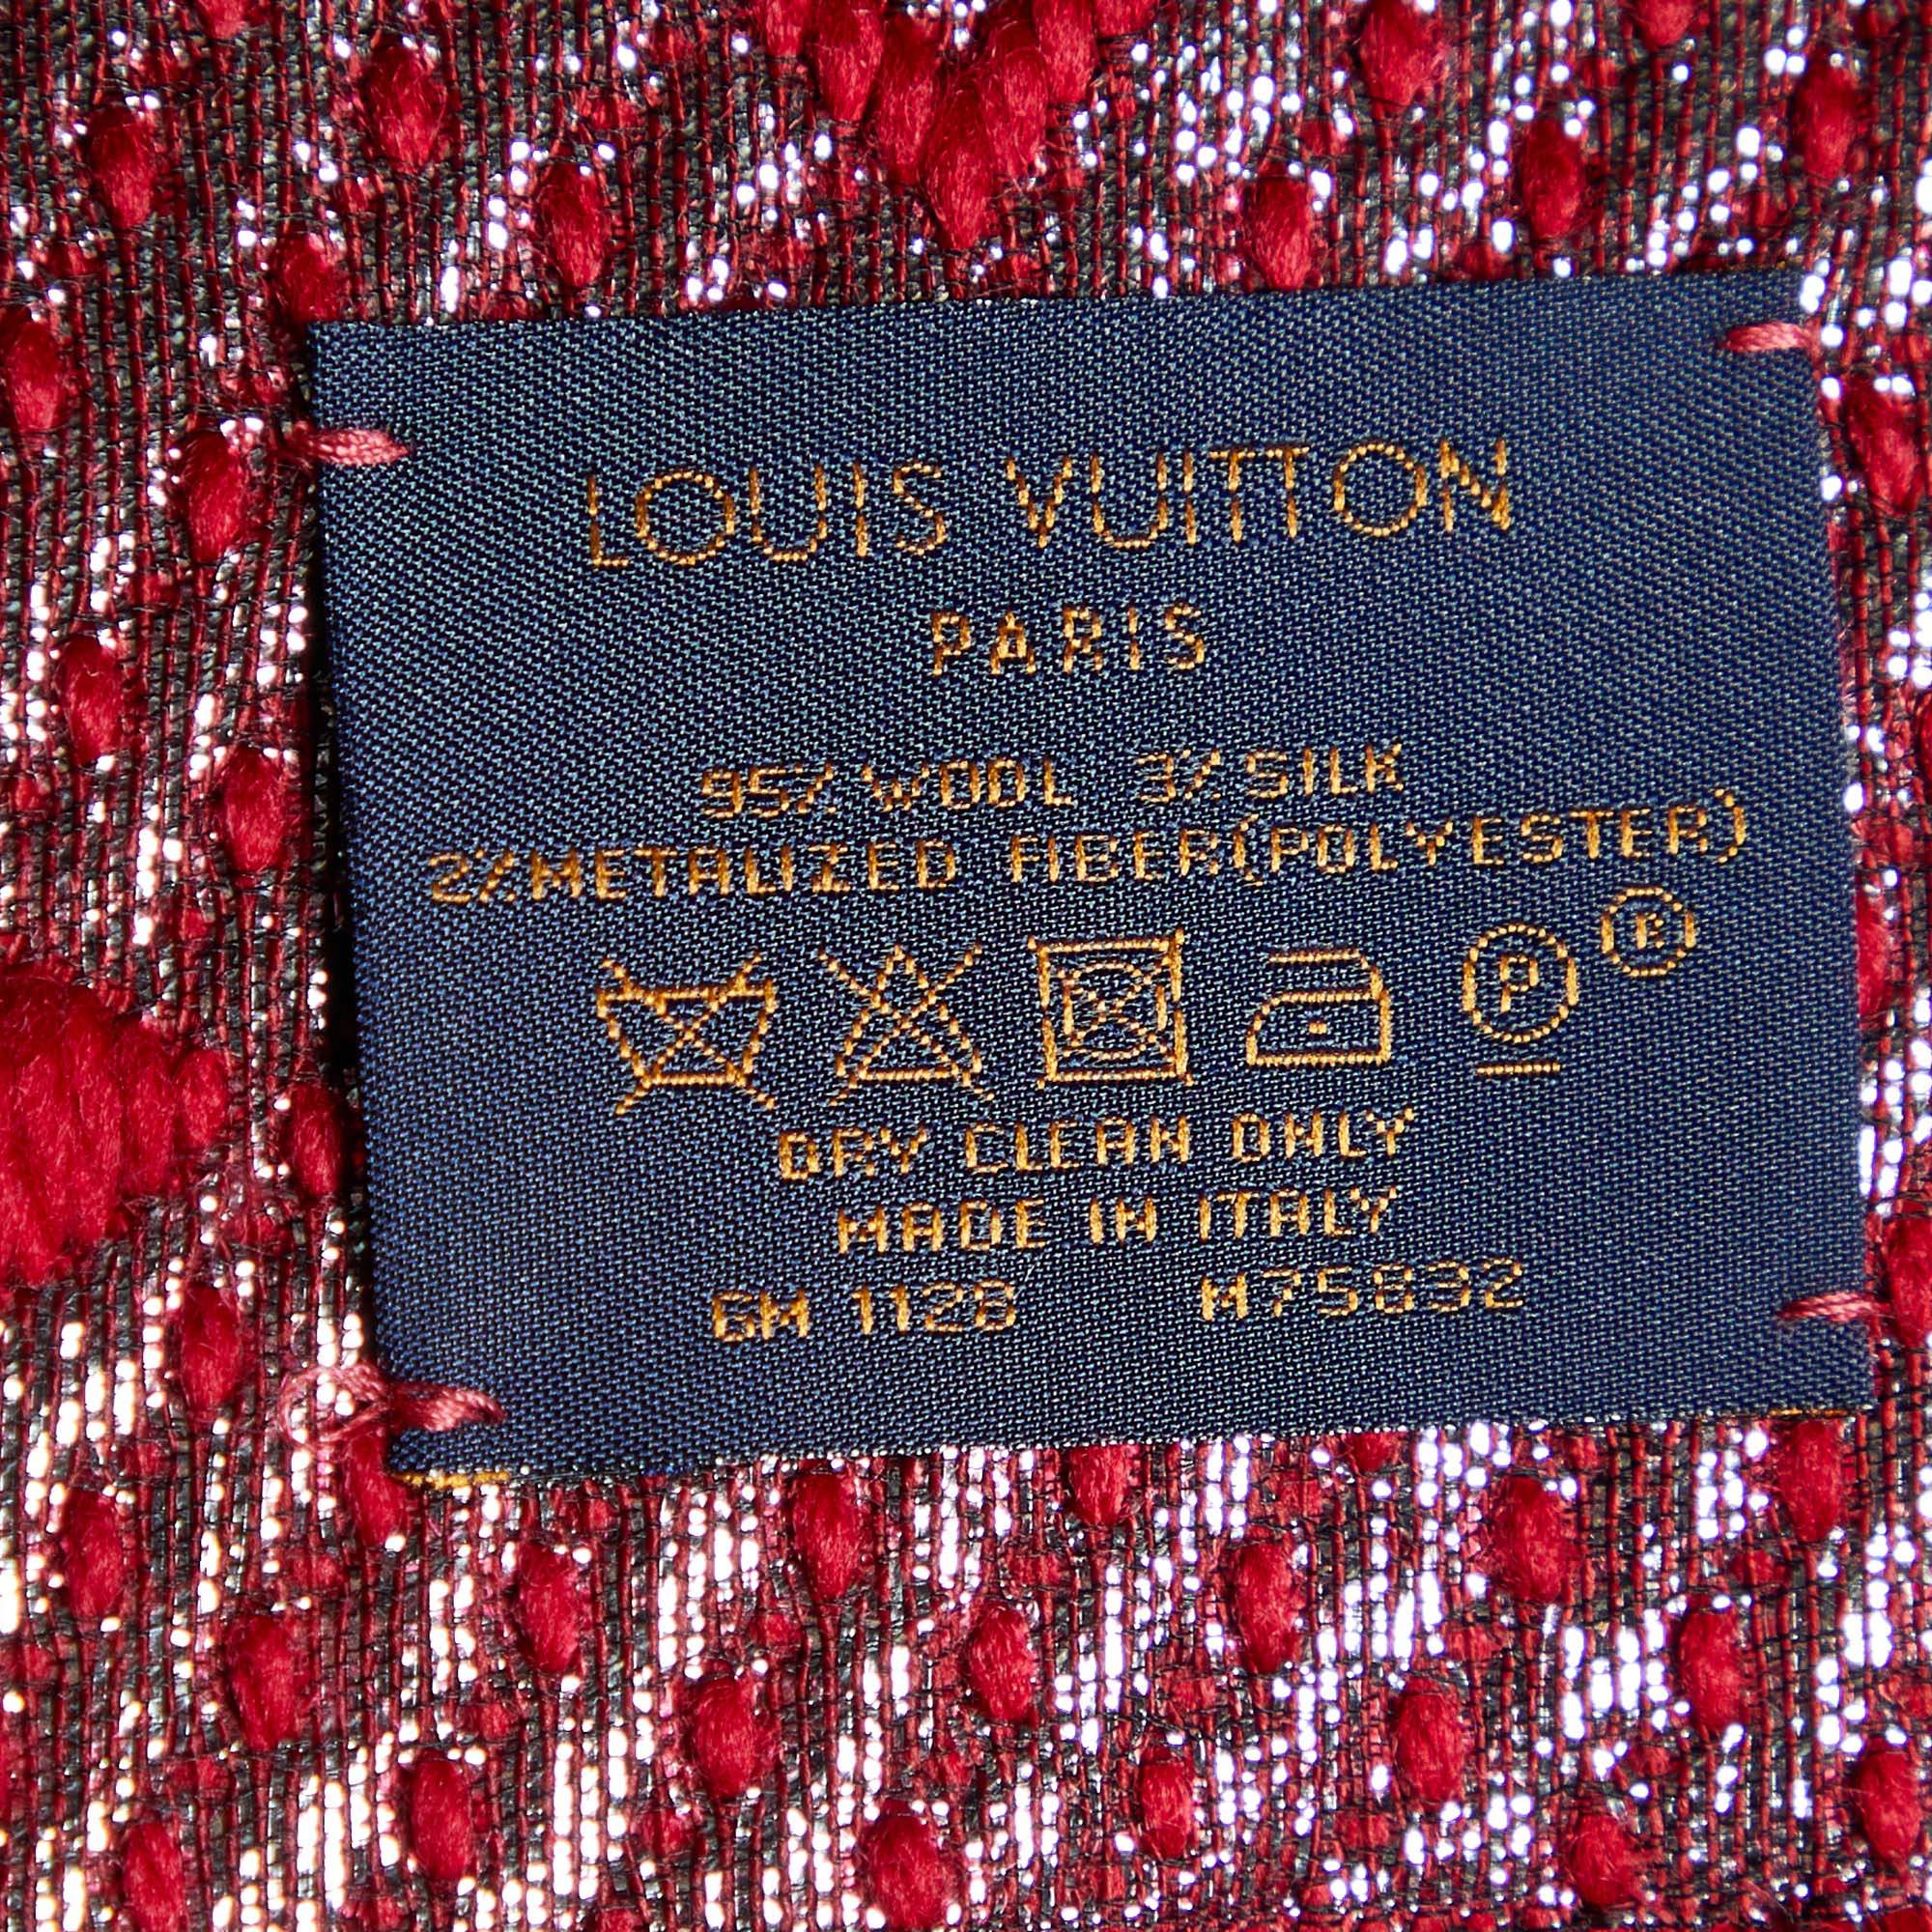 Logomania wool scarf Louis Vuitton Red in Wool - 27105256